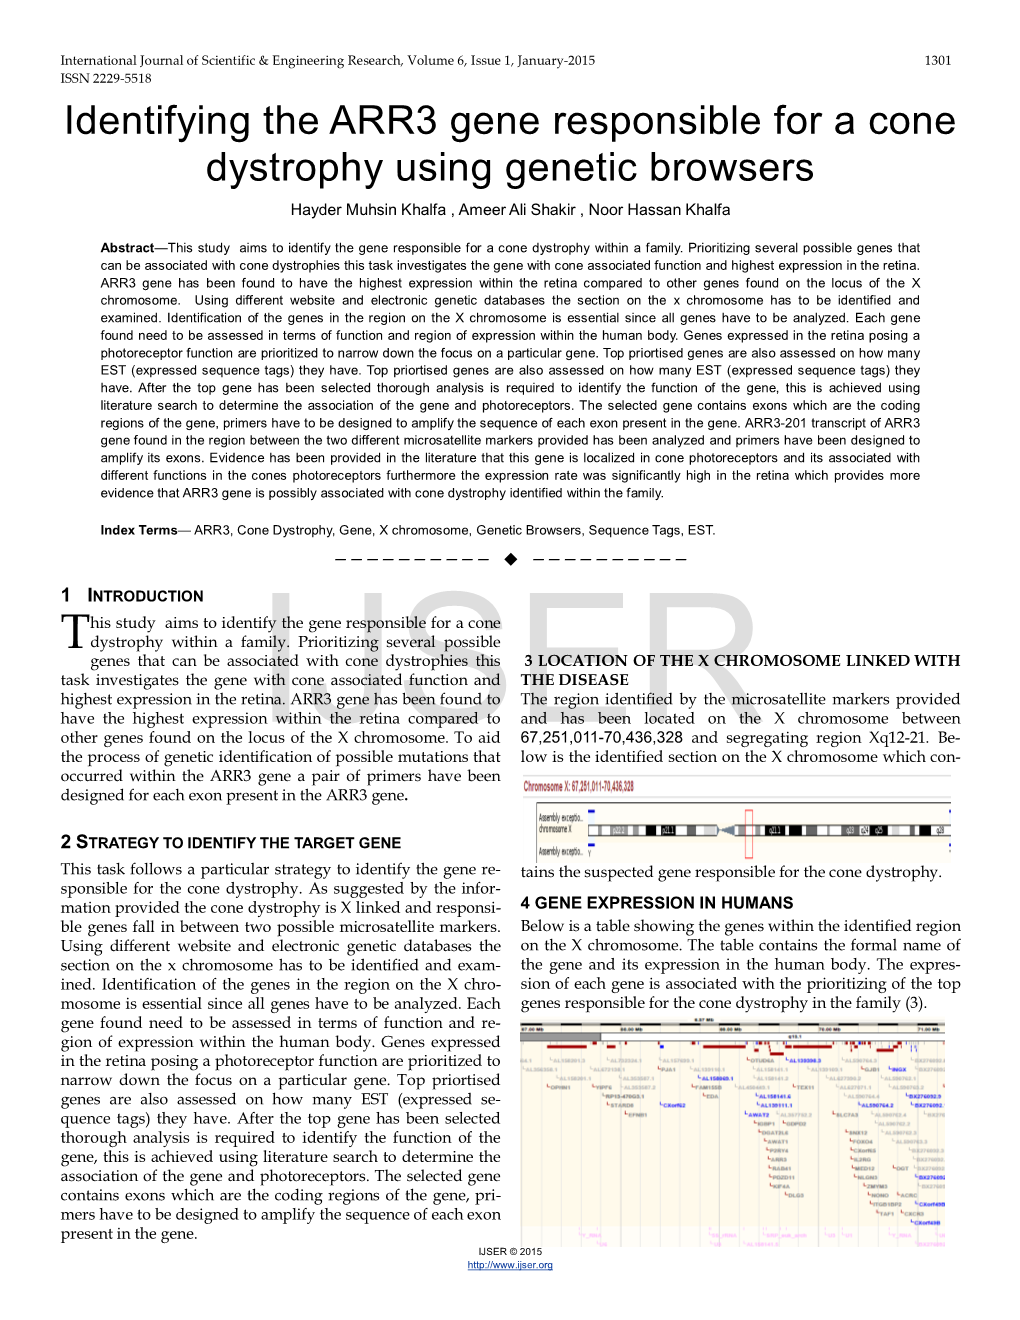 Identifying the ARR3 Gene Responsible for a Cone Dystrophy Using Genetic Browsers Hayder Muhsin Khalfa , Ameer Ali Shakir , Noor Hassan Khalfa